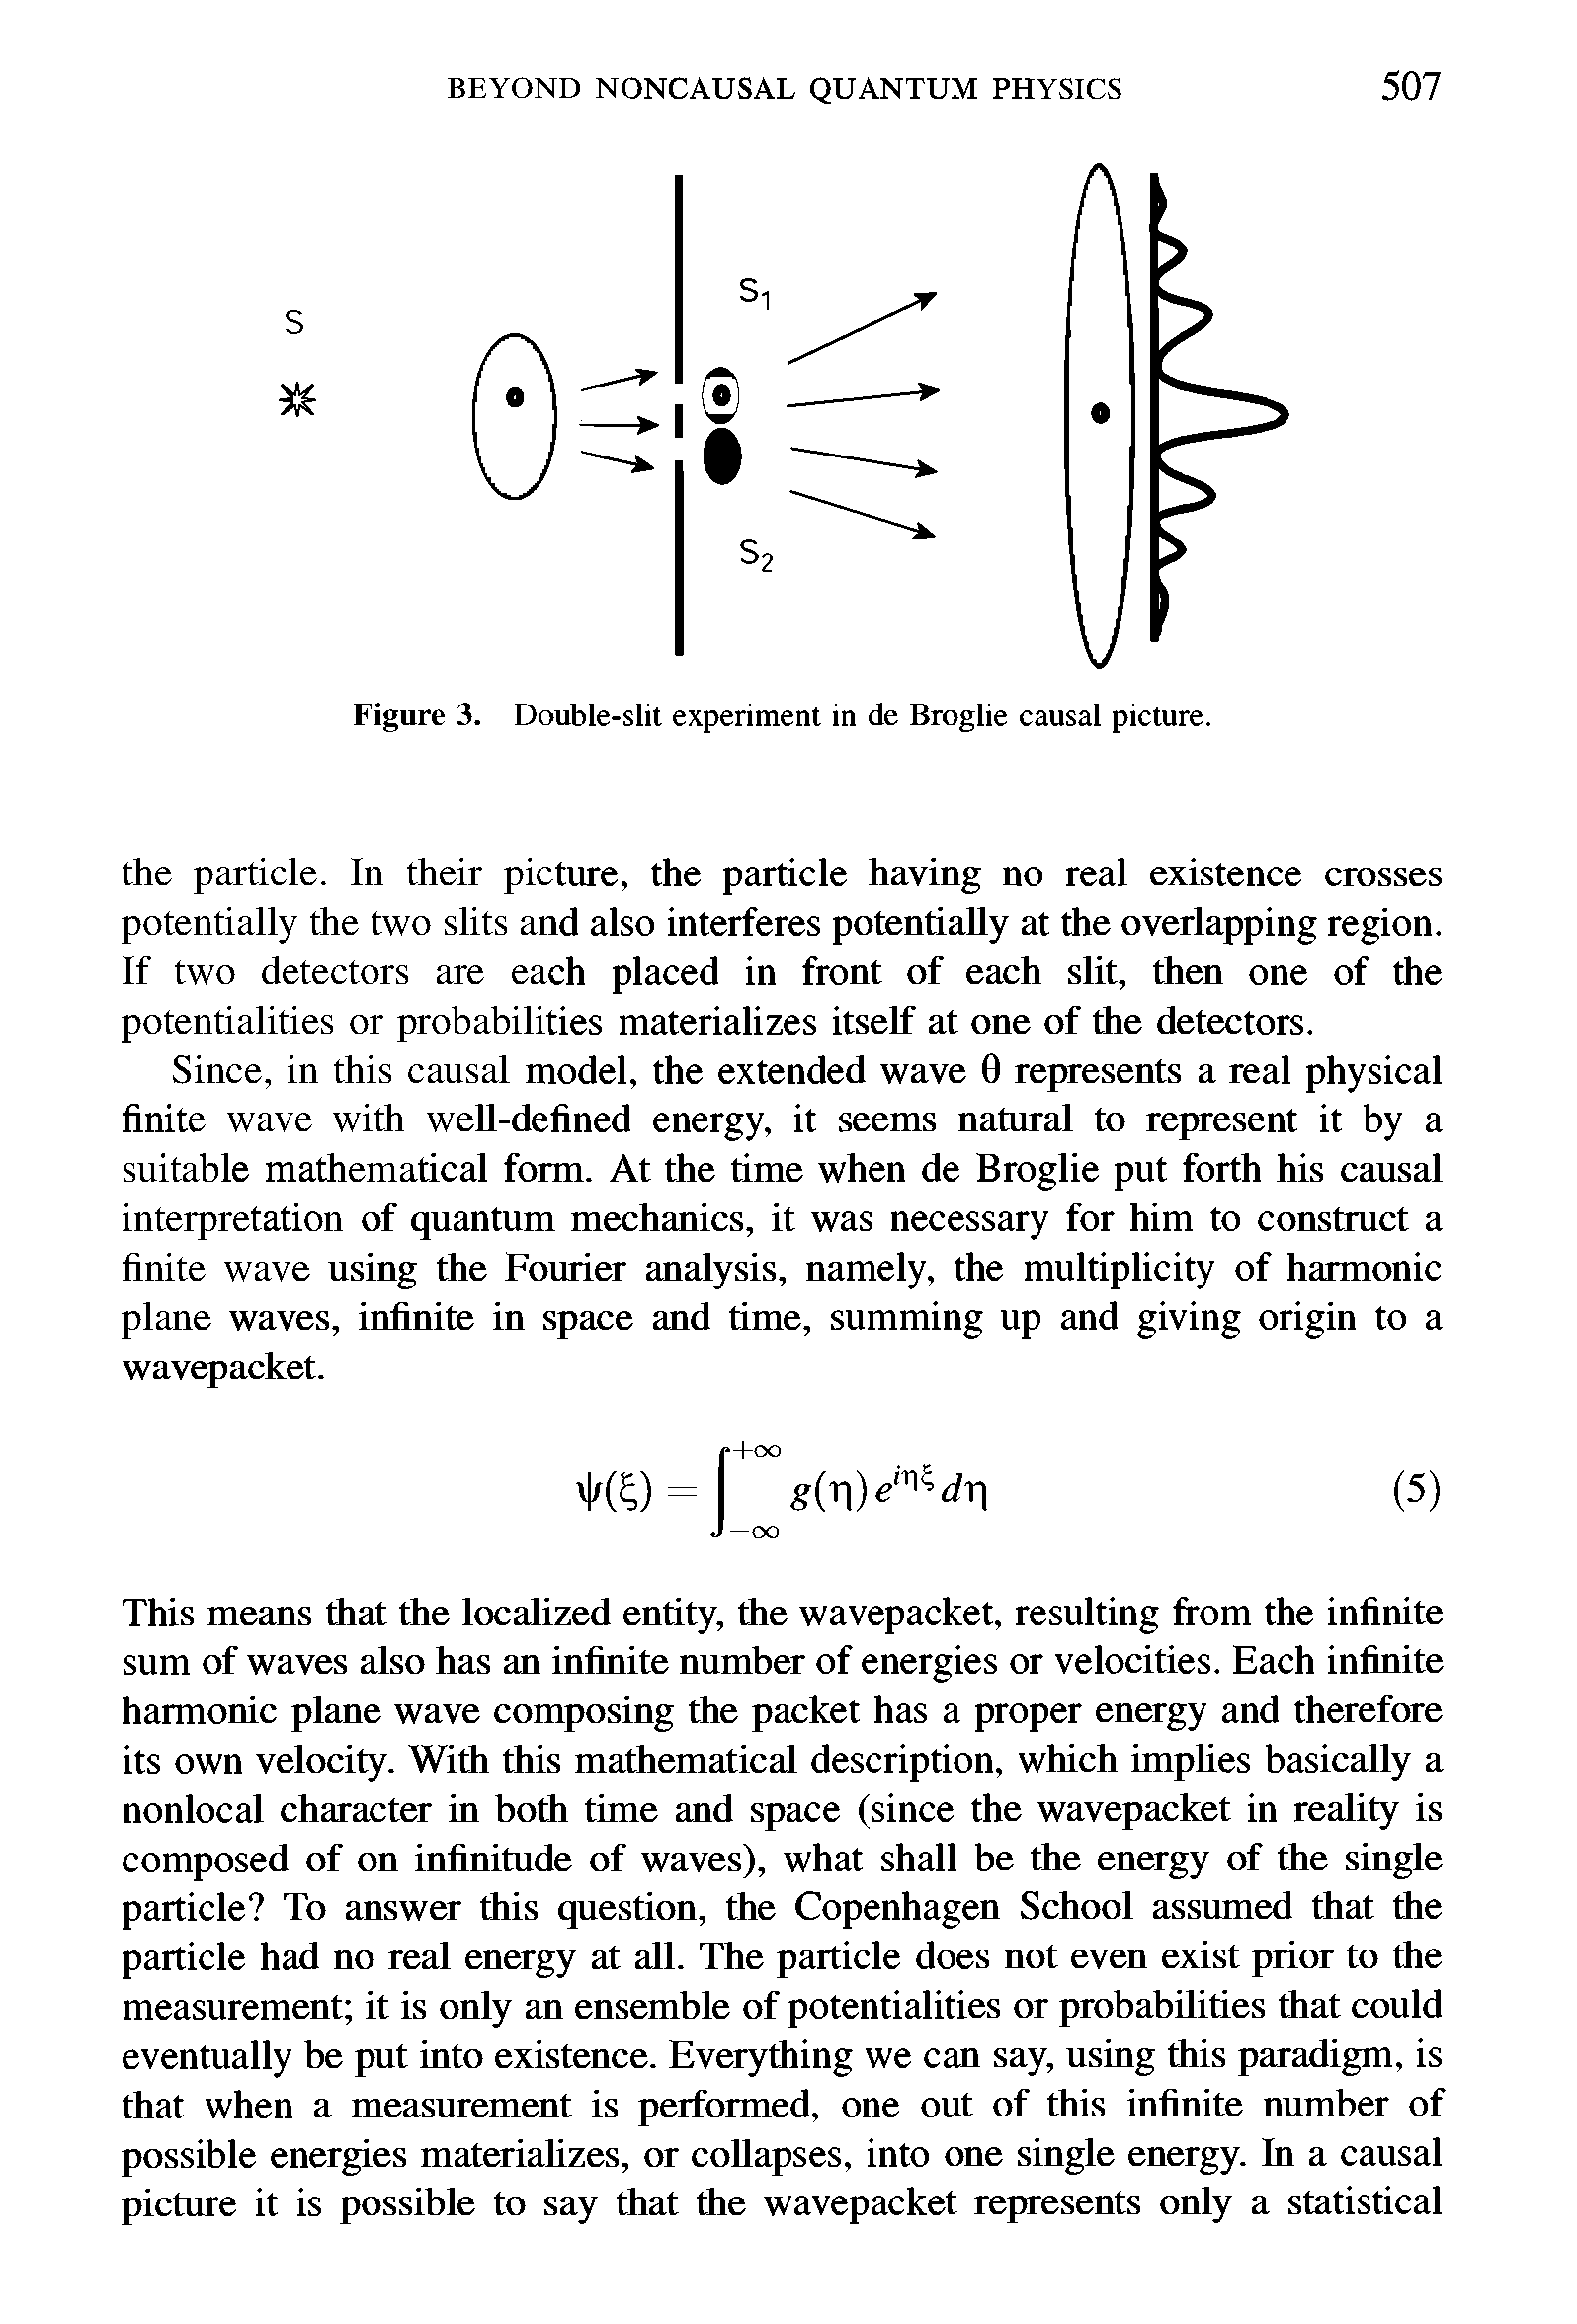 Figure 3. Double-slit experiment in de Broglie causal picture.